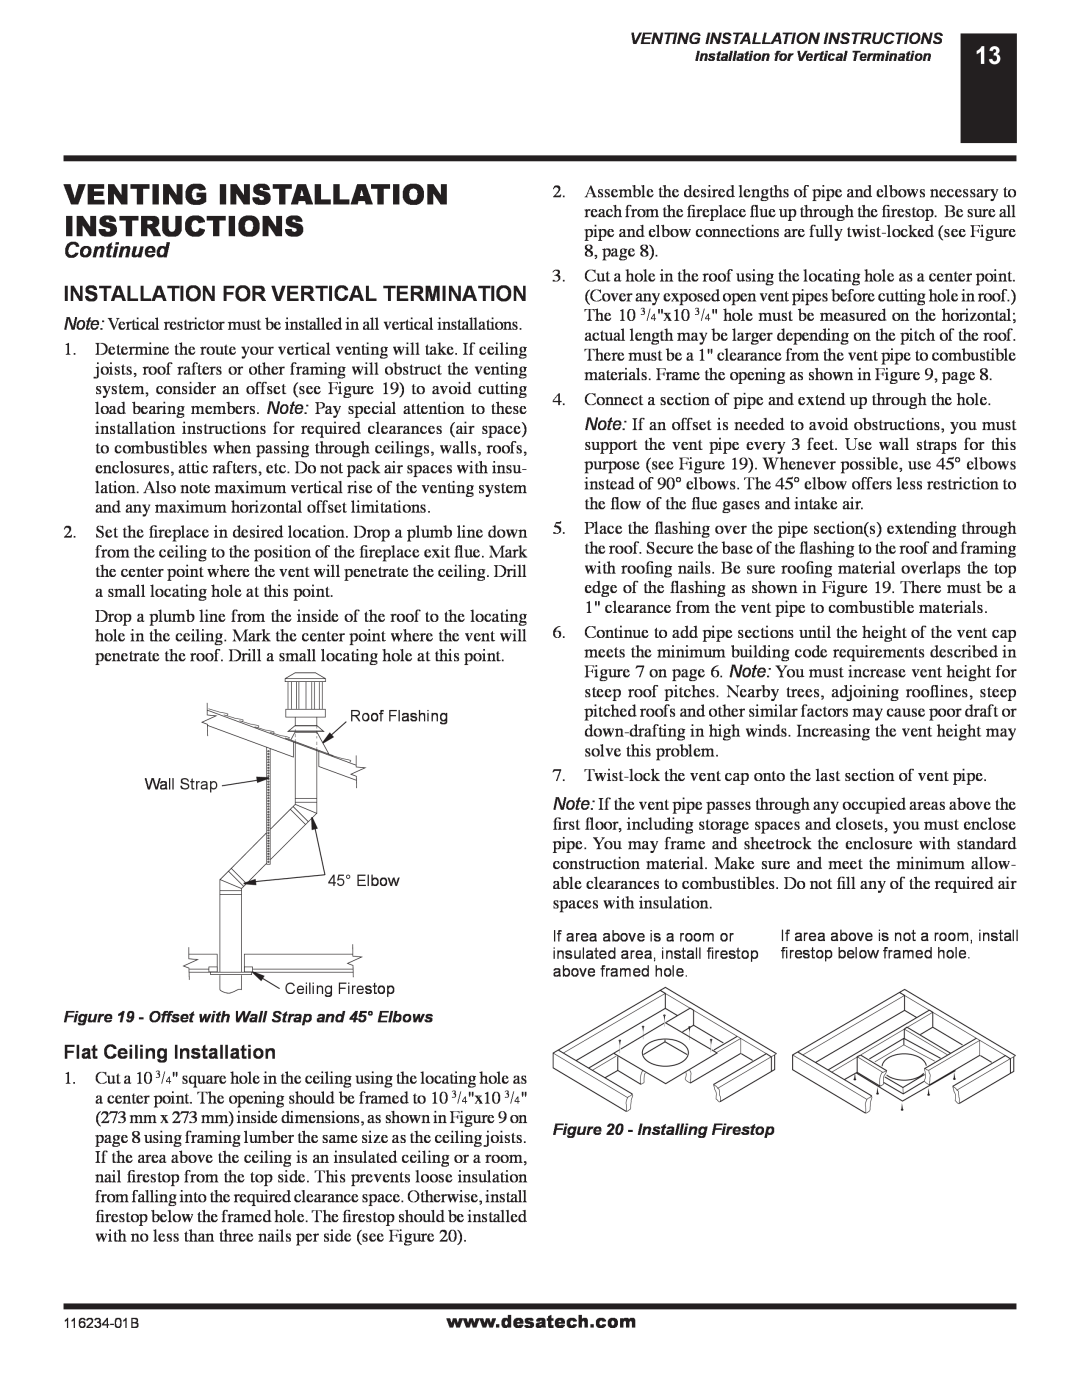 Desa (V)TC36NE, (V)TC36PE Venting Installation Instructions, Continued, Installation For Vertical Termination 